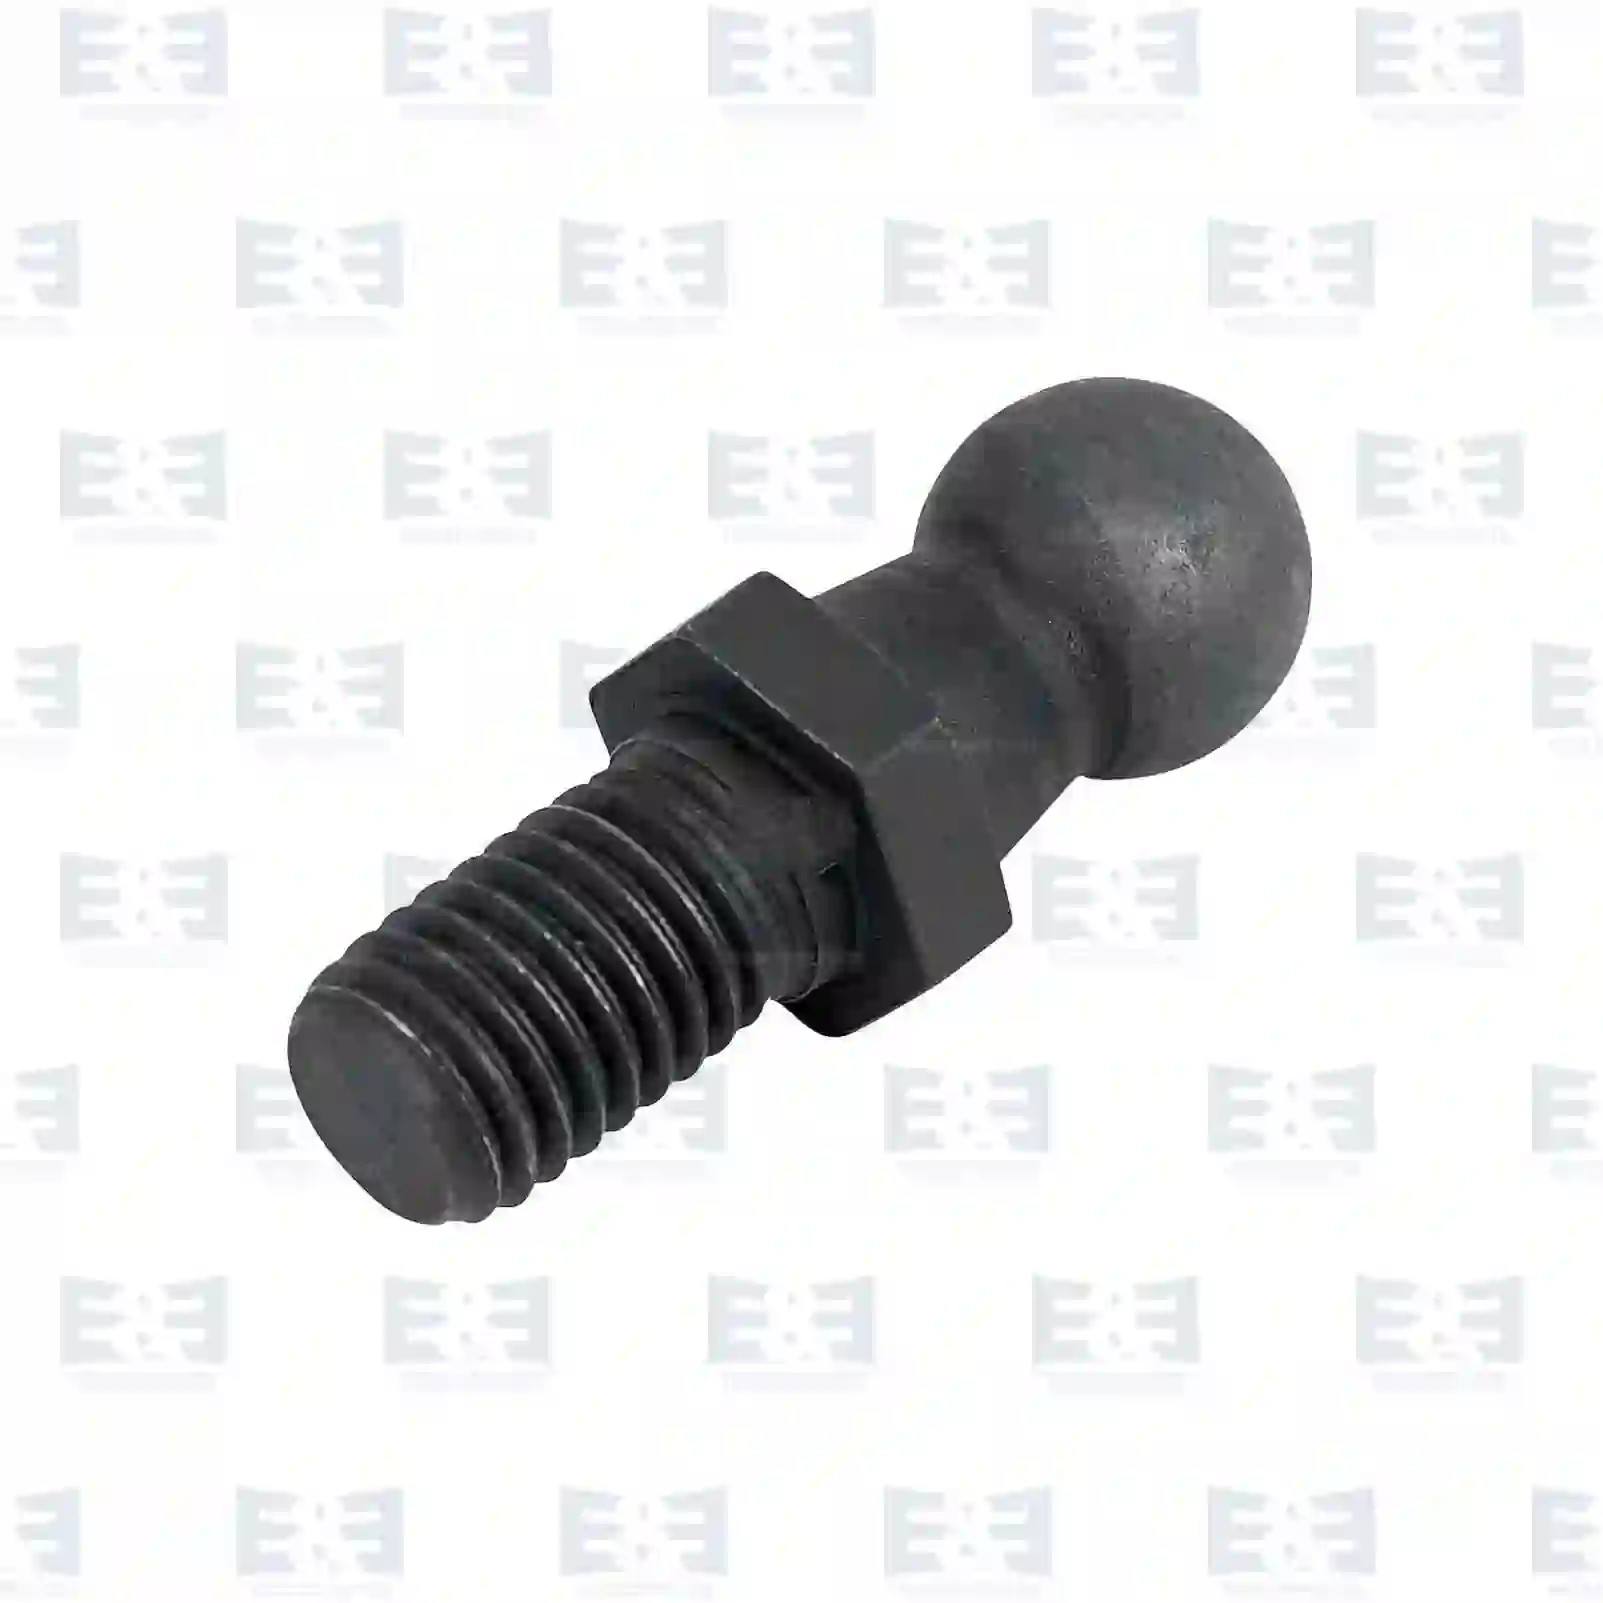  Ball pin || E&E Truck Spare Parts | Truck Spare Parts, Auotomotive Spare Parts